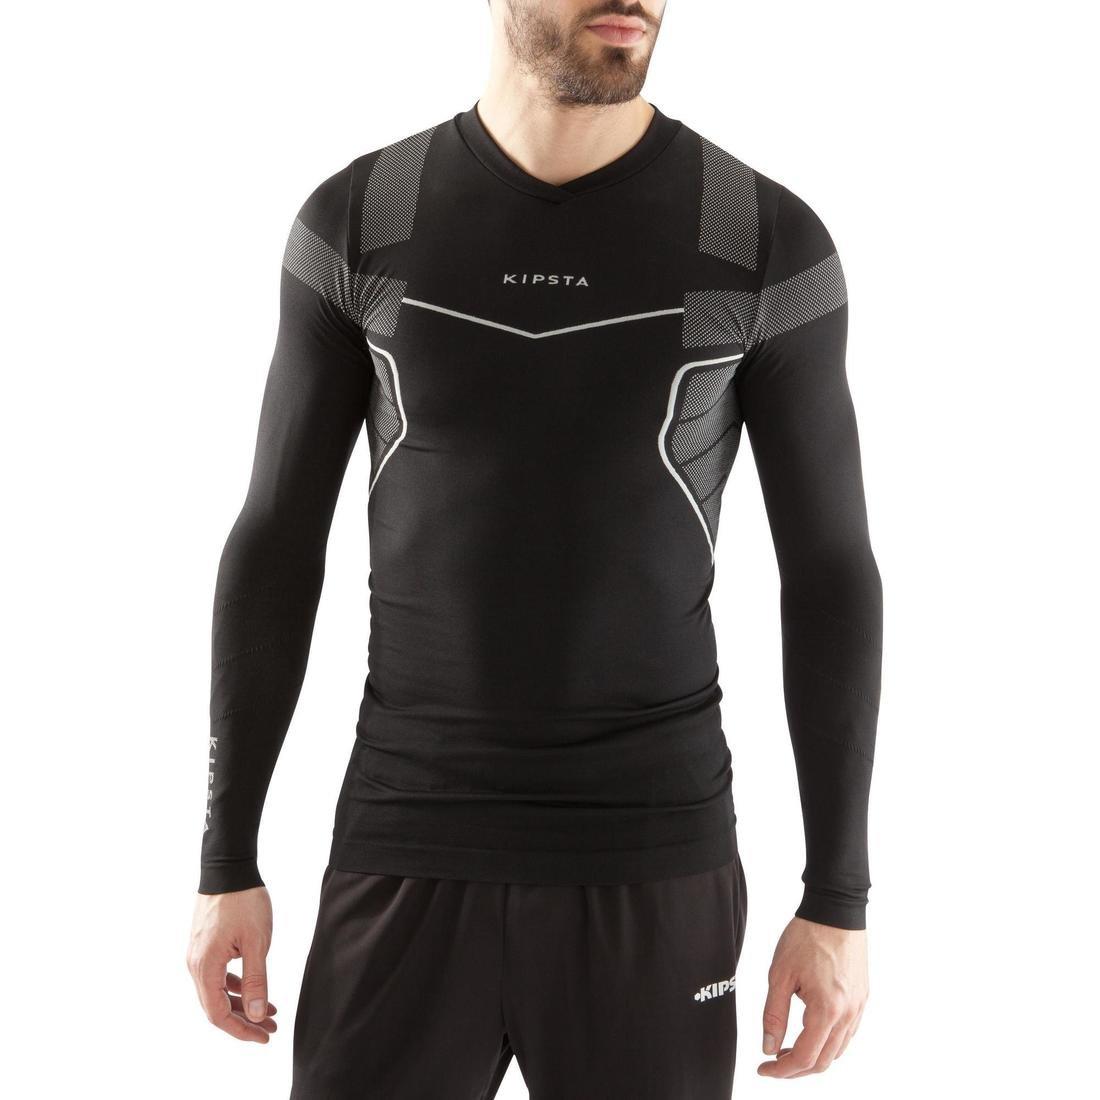 Decathlon Football Tights Underwear - Black - Adult - Keepdry 500